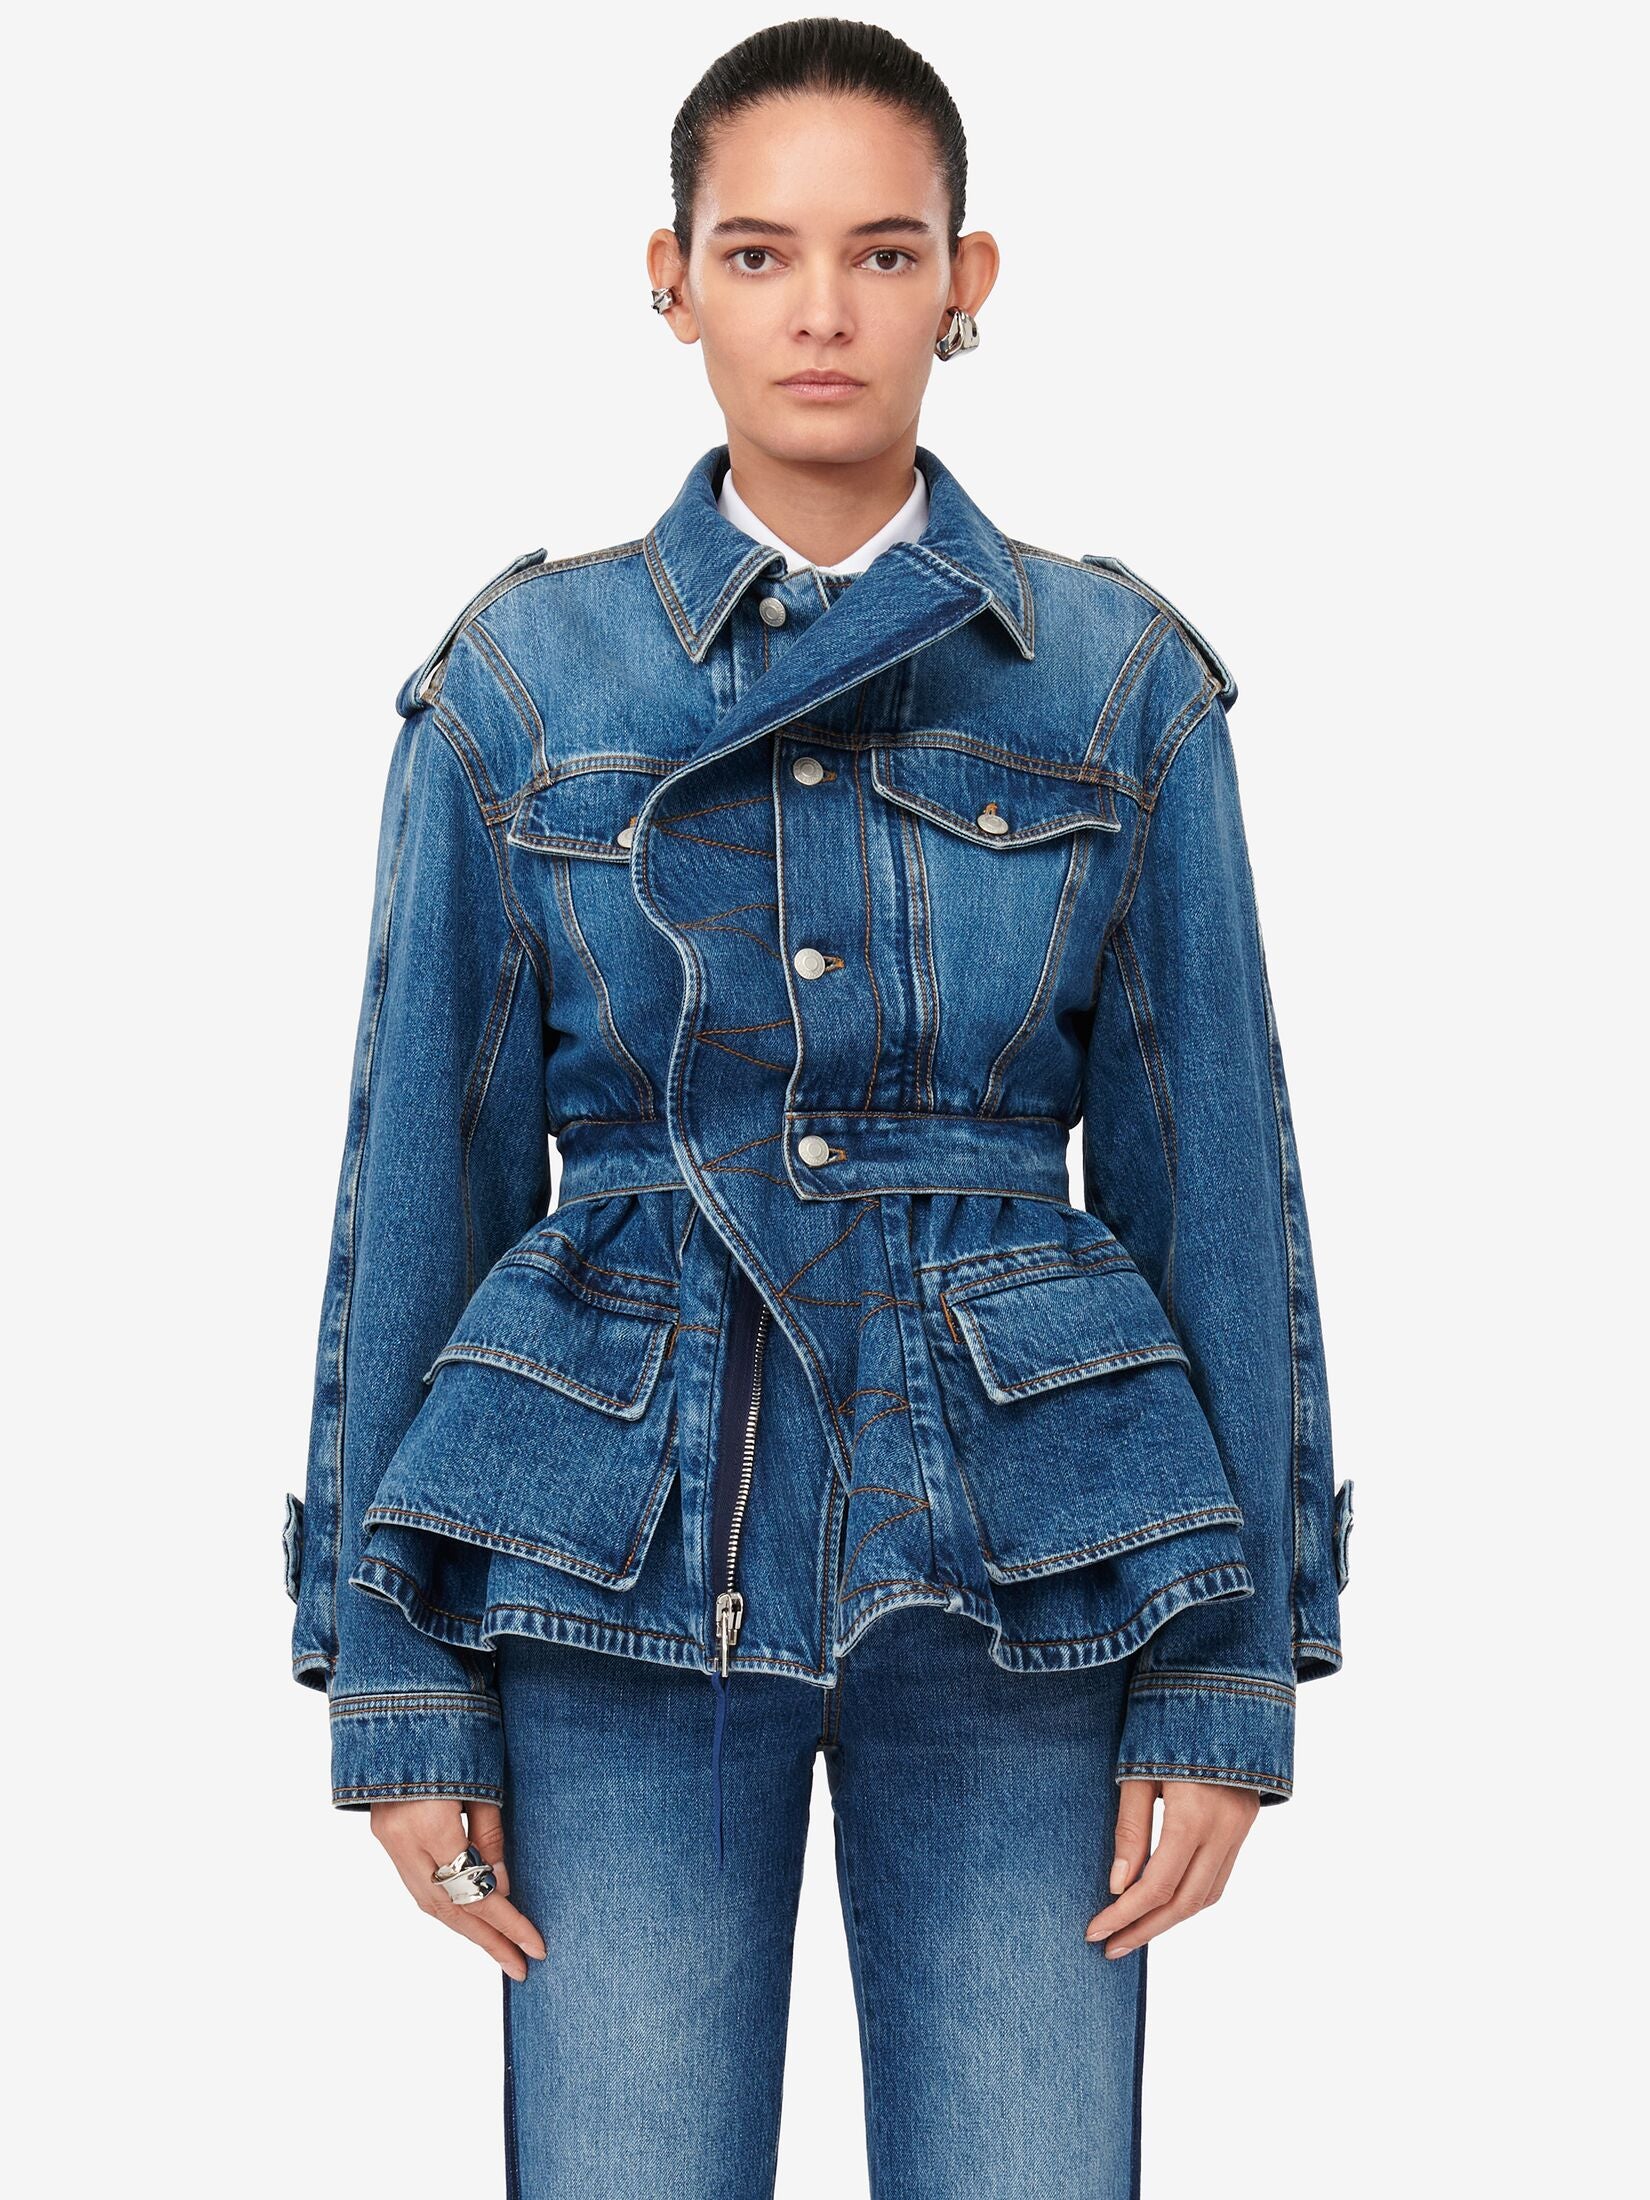 Women's Patch Pocket Peplum Denim Jacket in Washed Blue